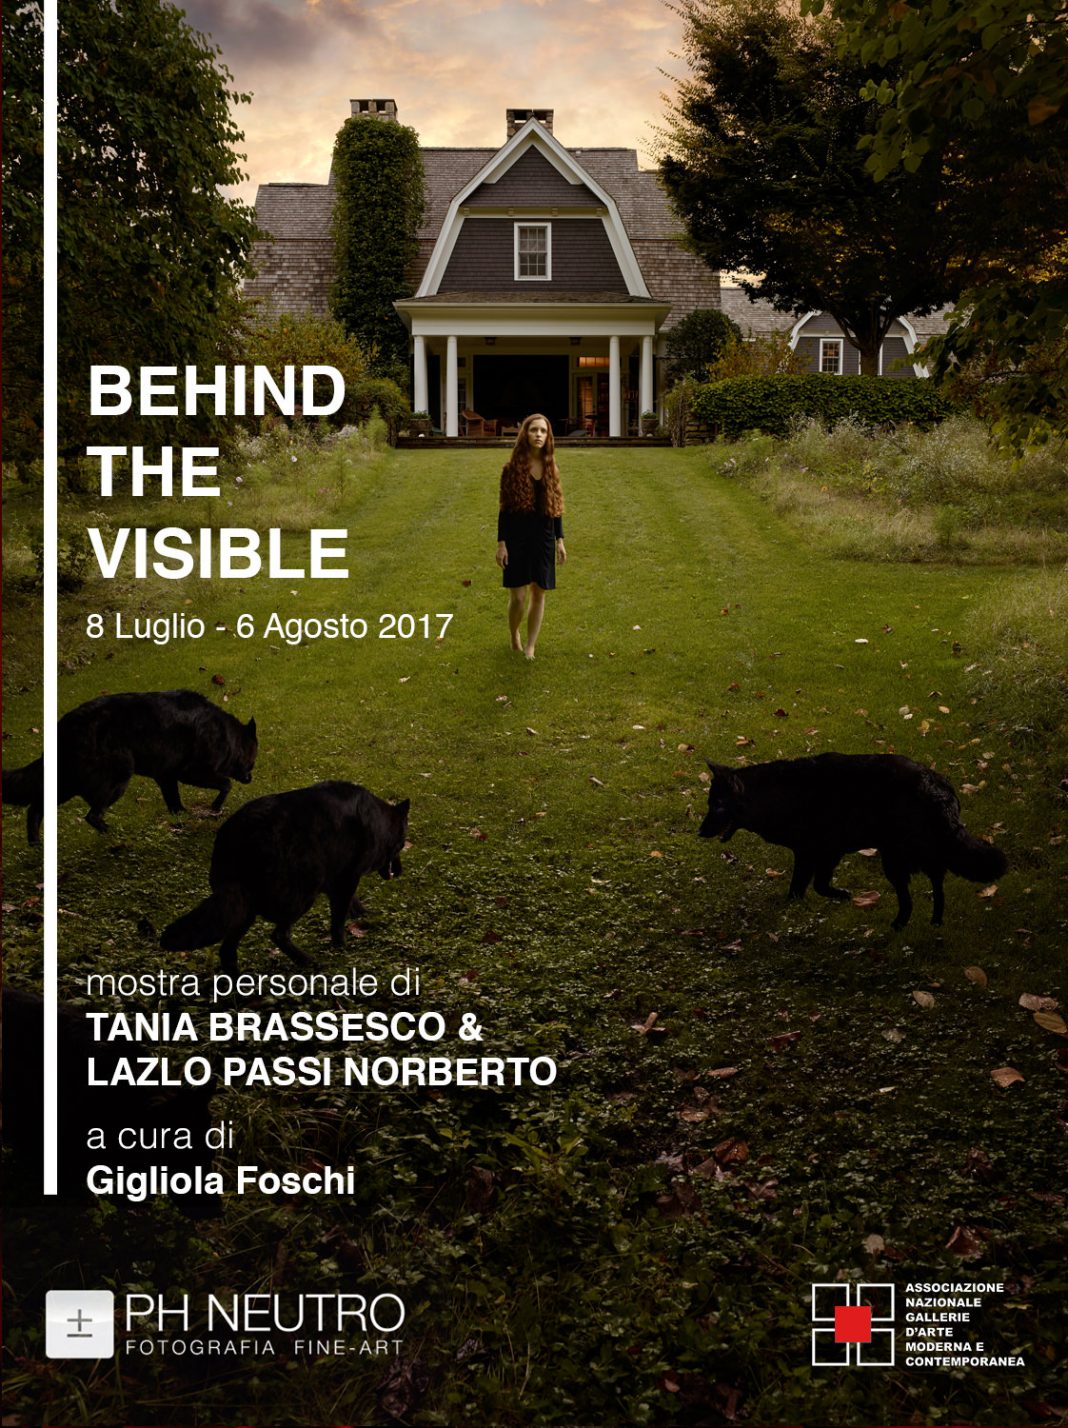 Tania Brassesco & Lazlo Passi Norberto –  Behind the Visiblehttps://www.exibart.com/repository/media/eventi/2017/06/tania-brassesco-038-lazlo-passi-norberto-8211-behind-the-visible-1068x1428.jpg